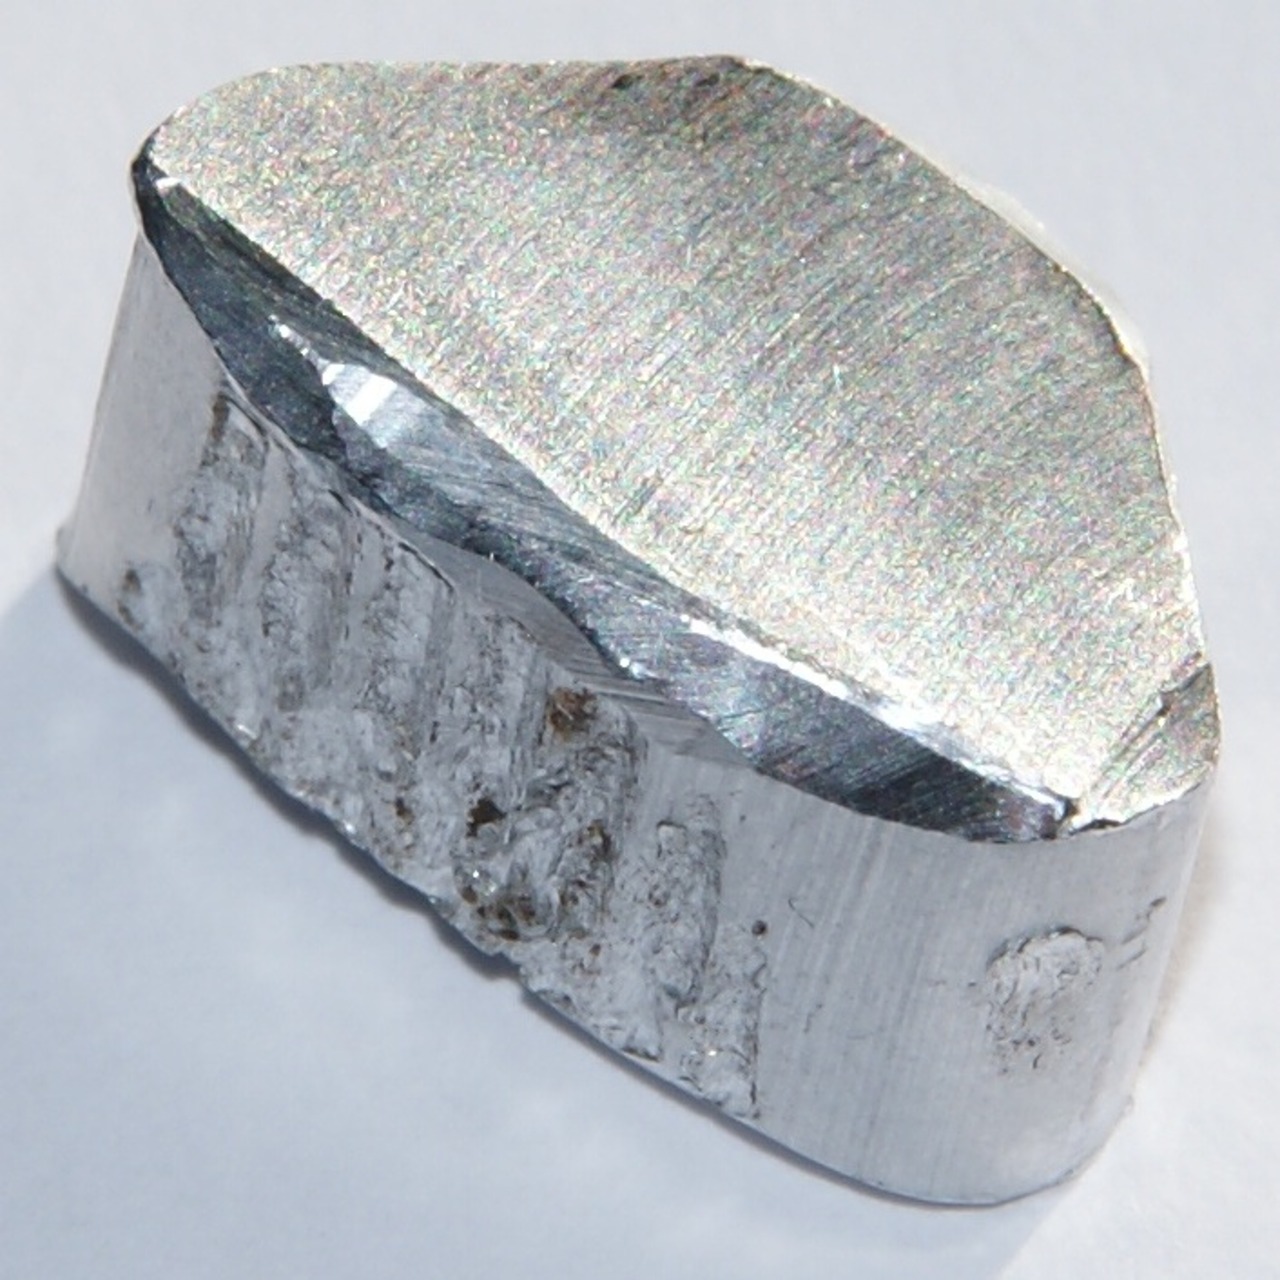 Michèle Kottelat: Aluminum is a silvery white ductile metal